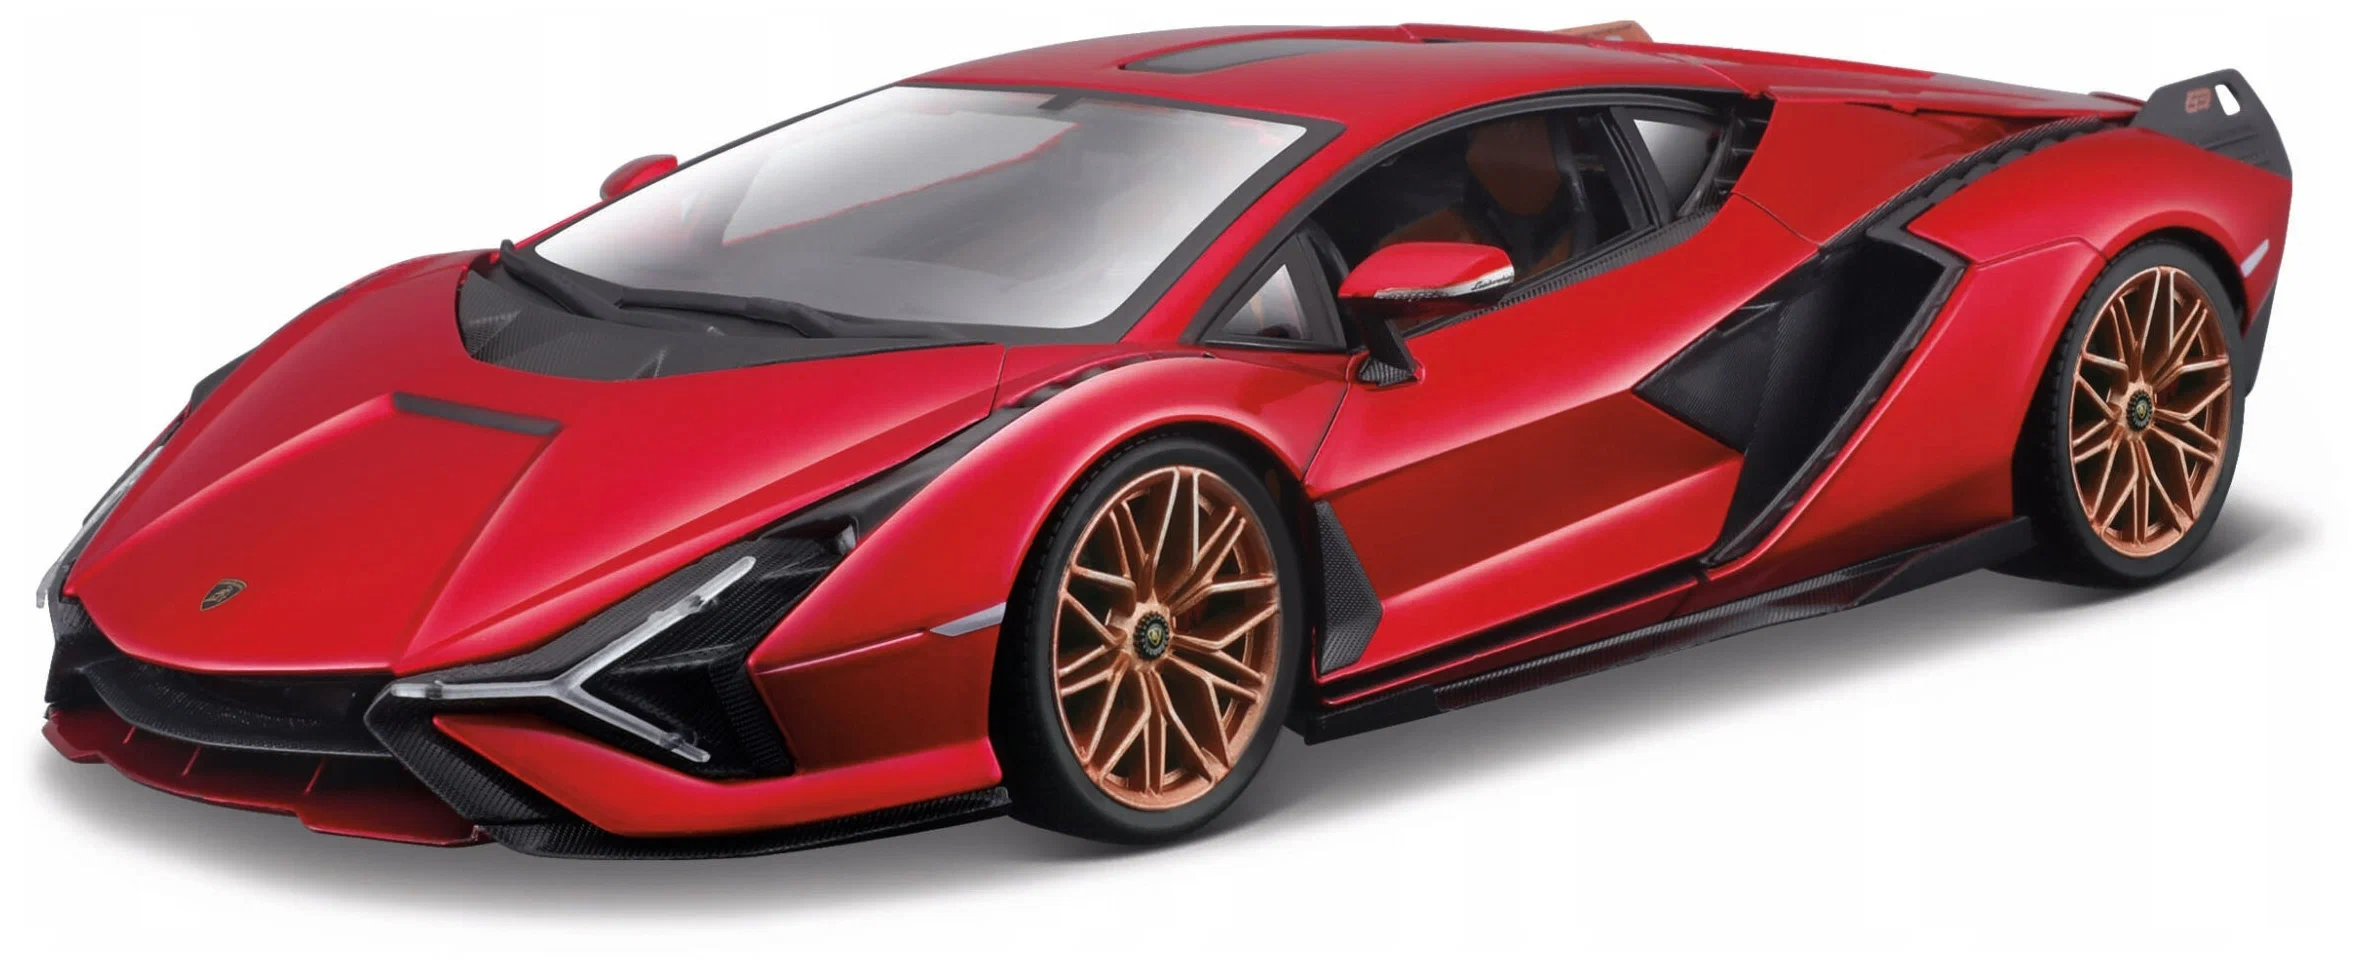 Машинка Bburago металлическая Lamborghini Sian FKP 37, 1:24, красная 18-21099 кроваво красная машинка мюрай м